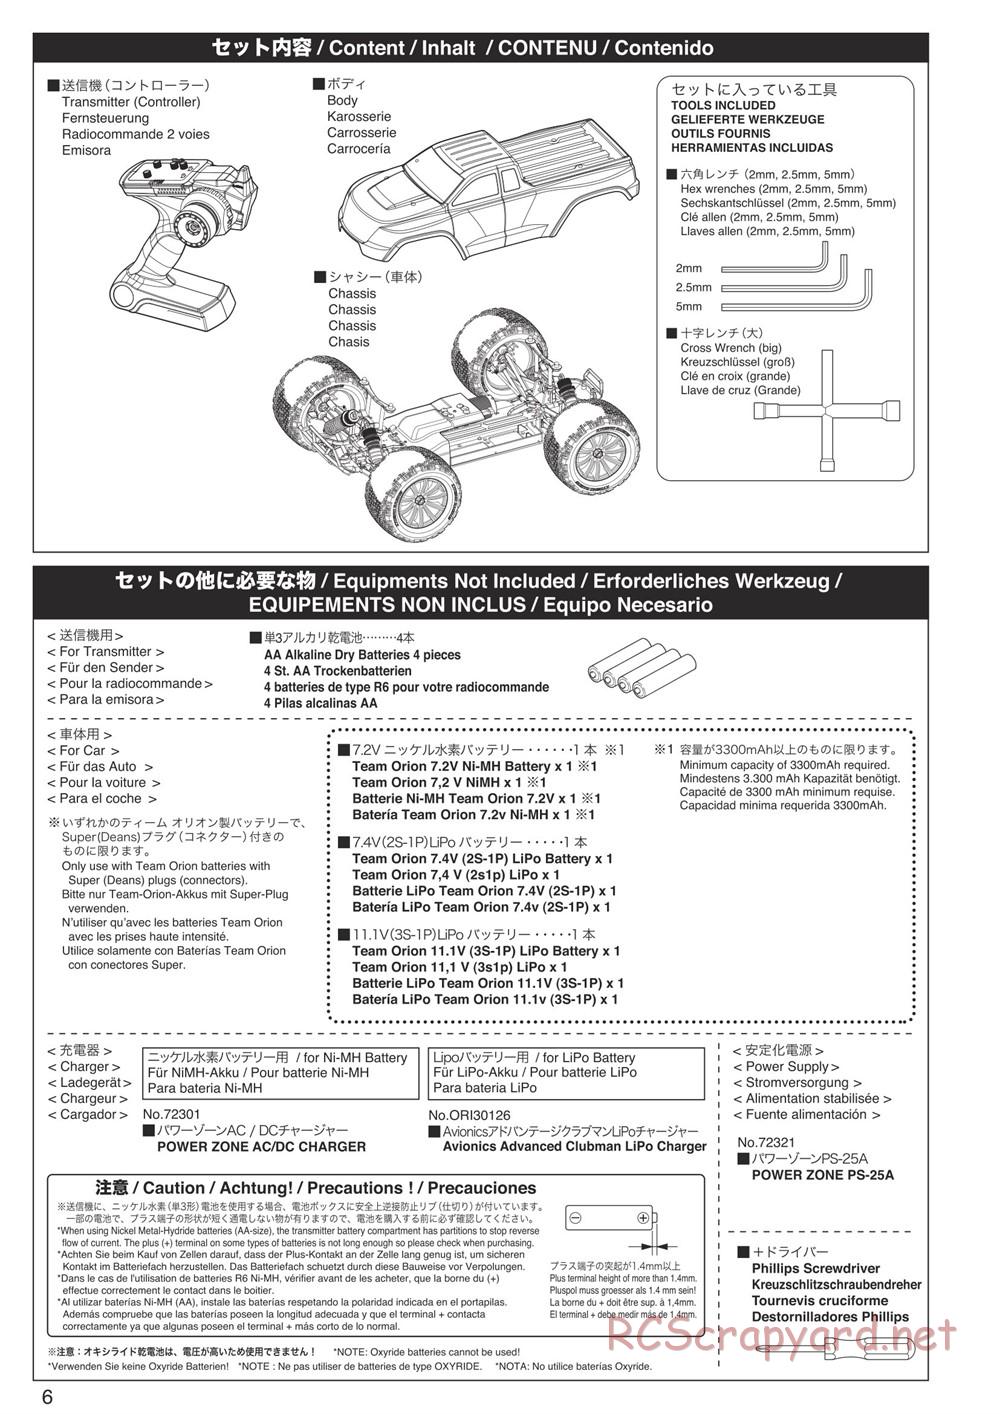 Kyosho - DMT VE-R - Manual - Page 6